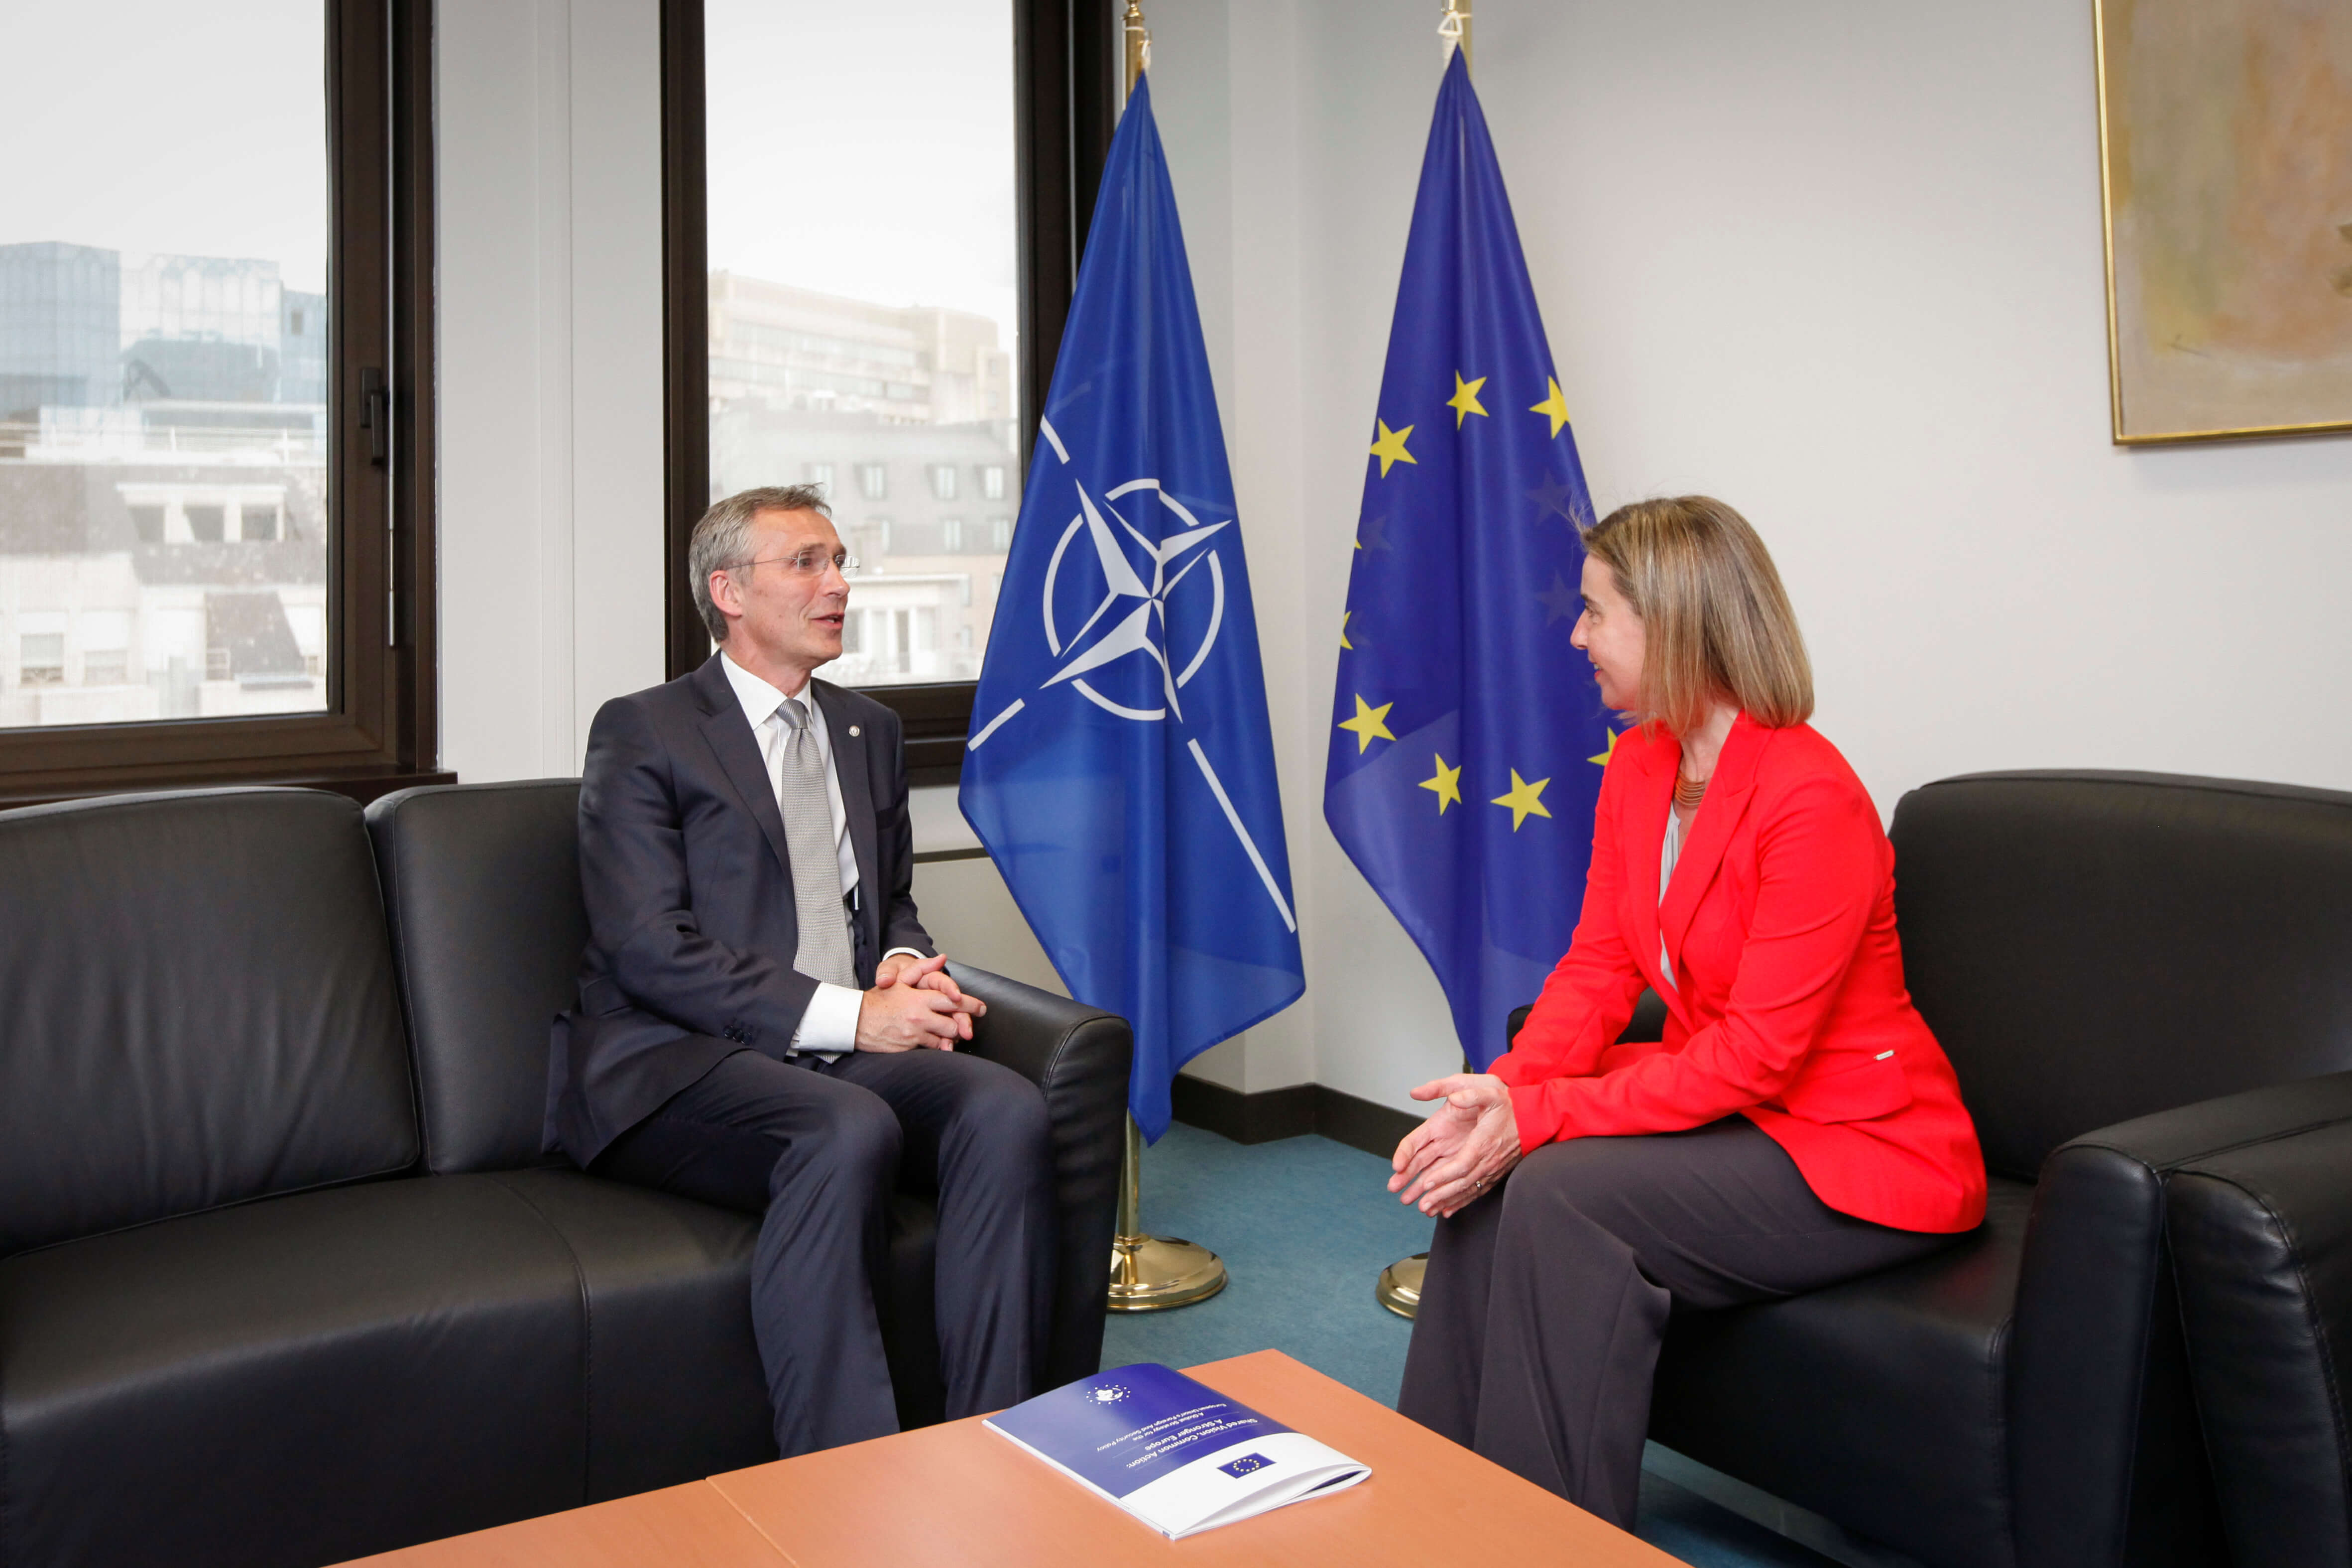 Mogherini presenteert eu global strategy aan navo sec general Stoltenberg